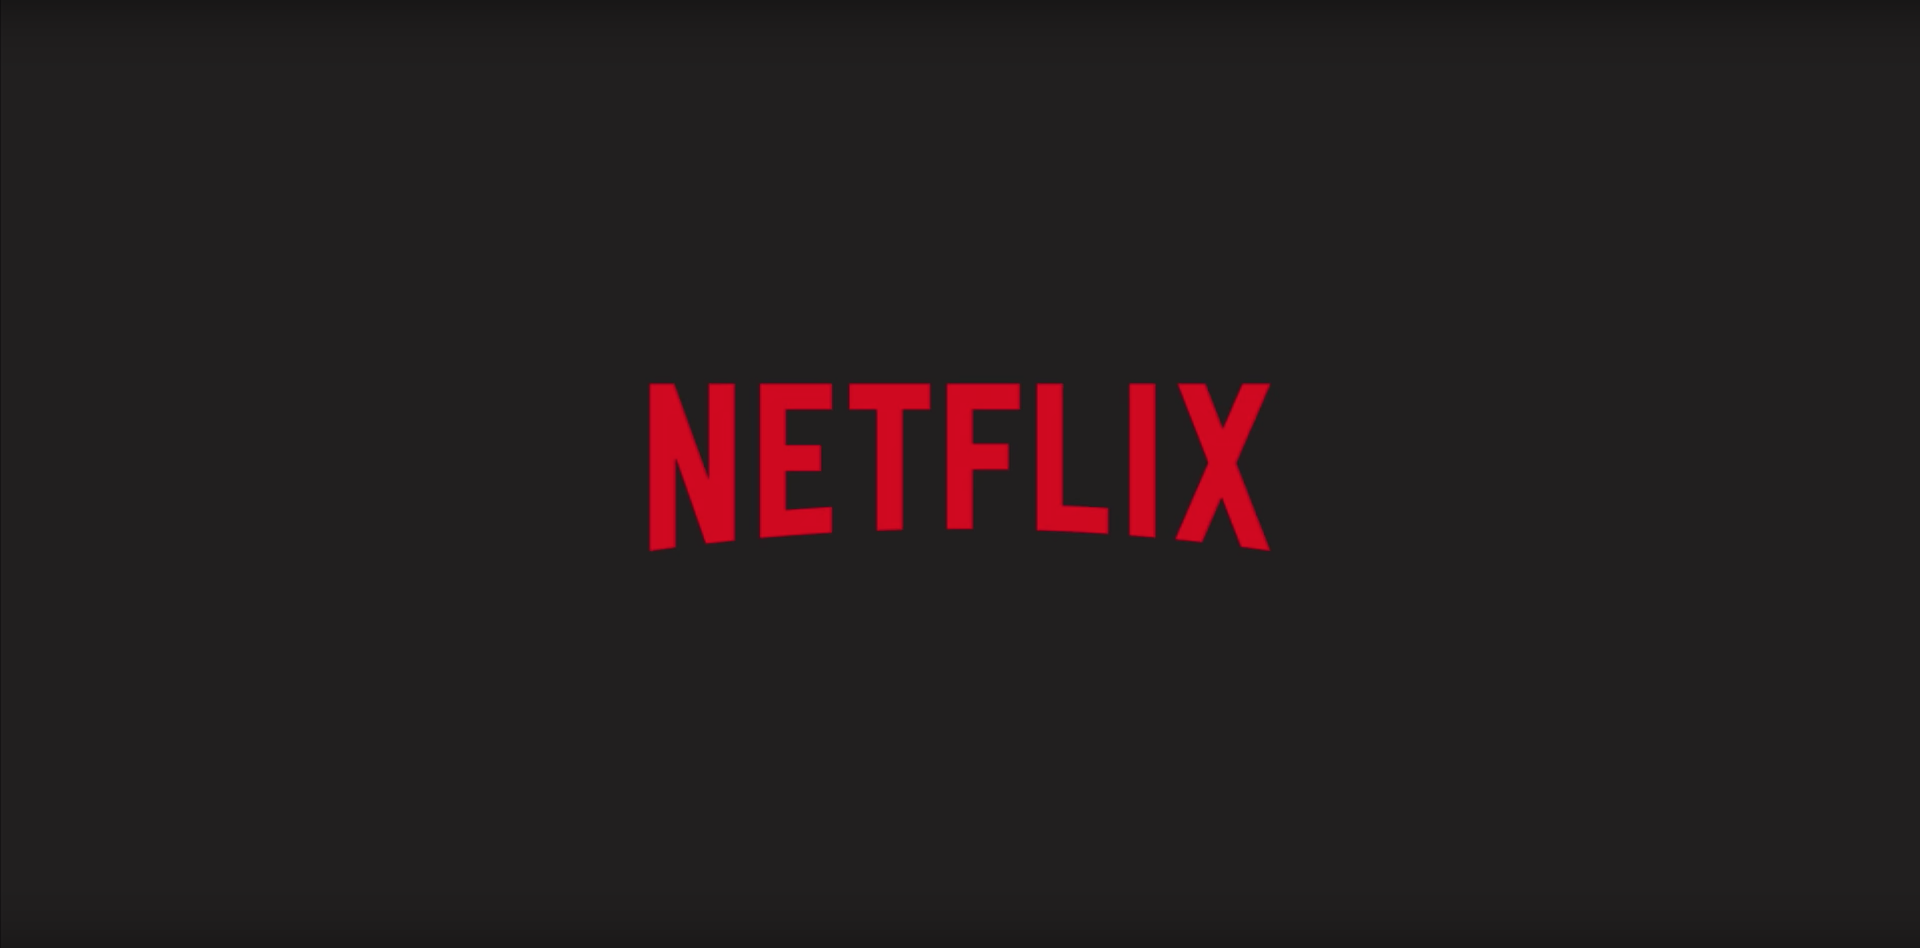 Netflix is raising its subscription price | DJMag.com